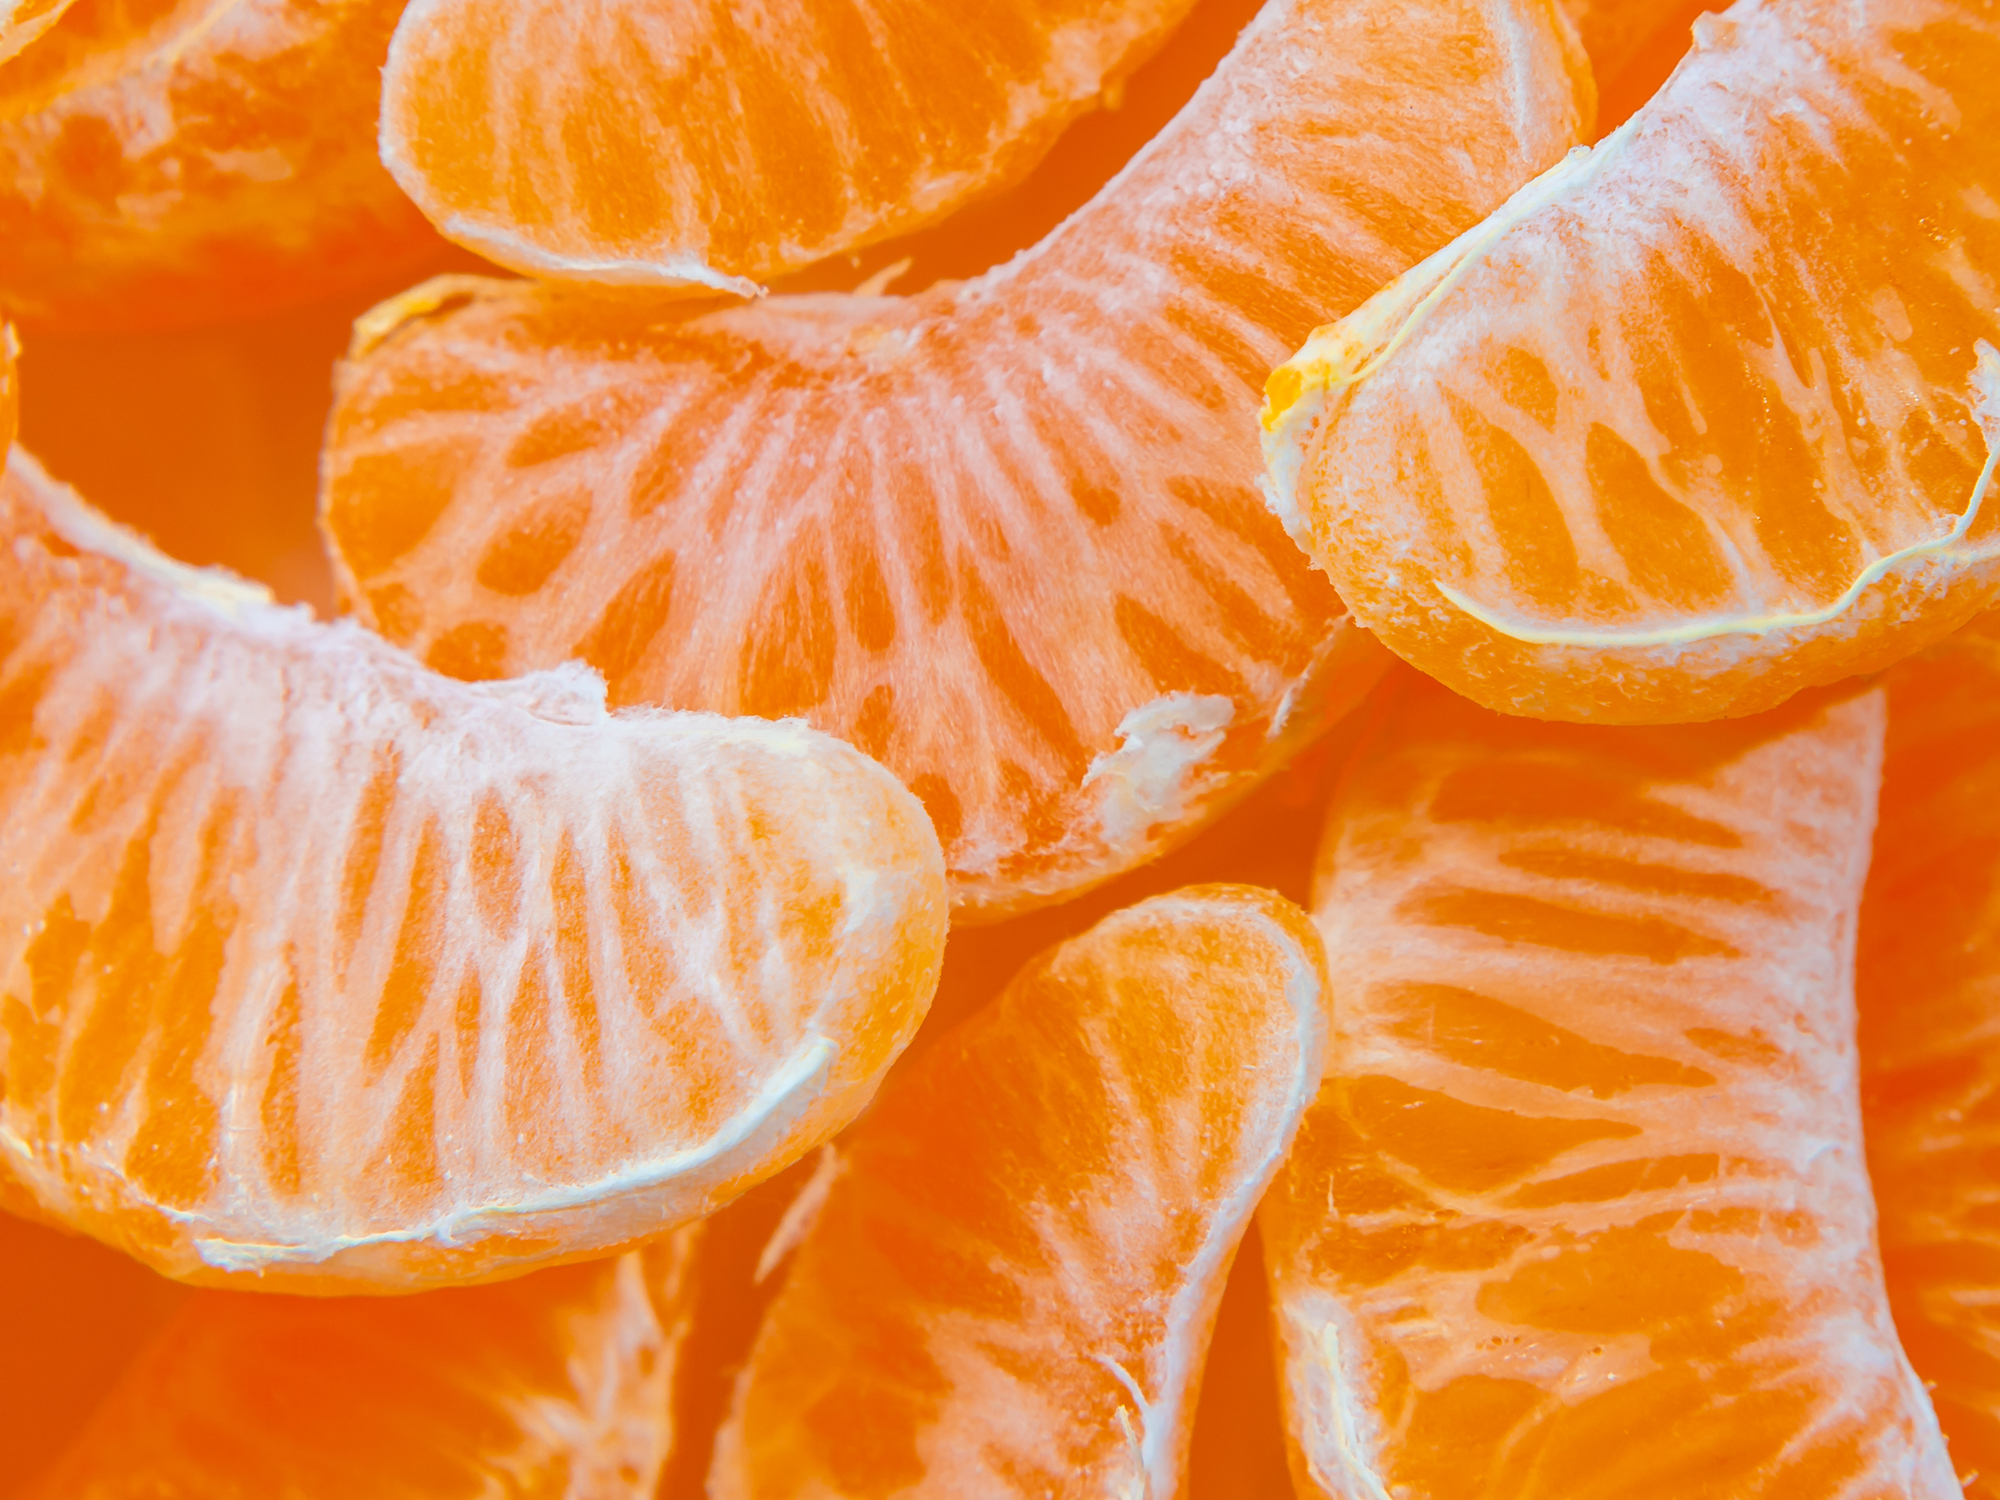 A popular citrus fruit could help peel back fat and diabetes risk